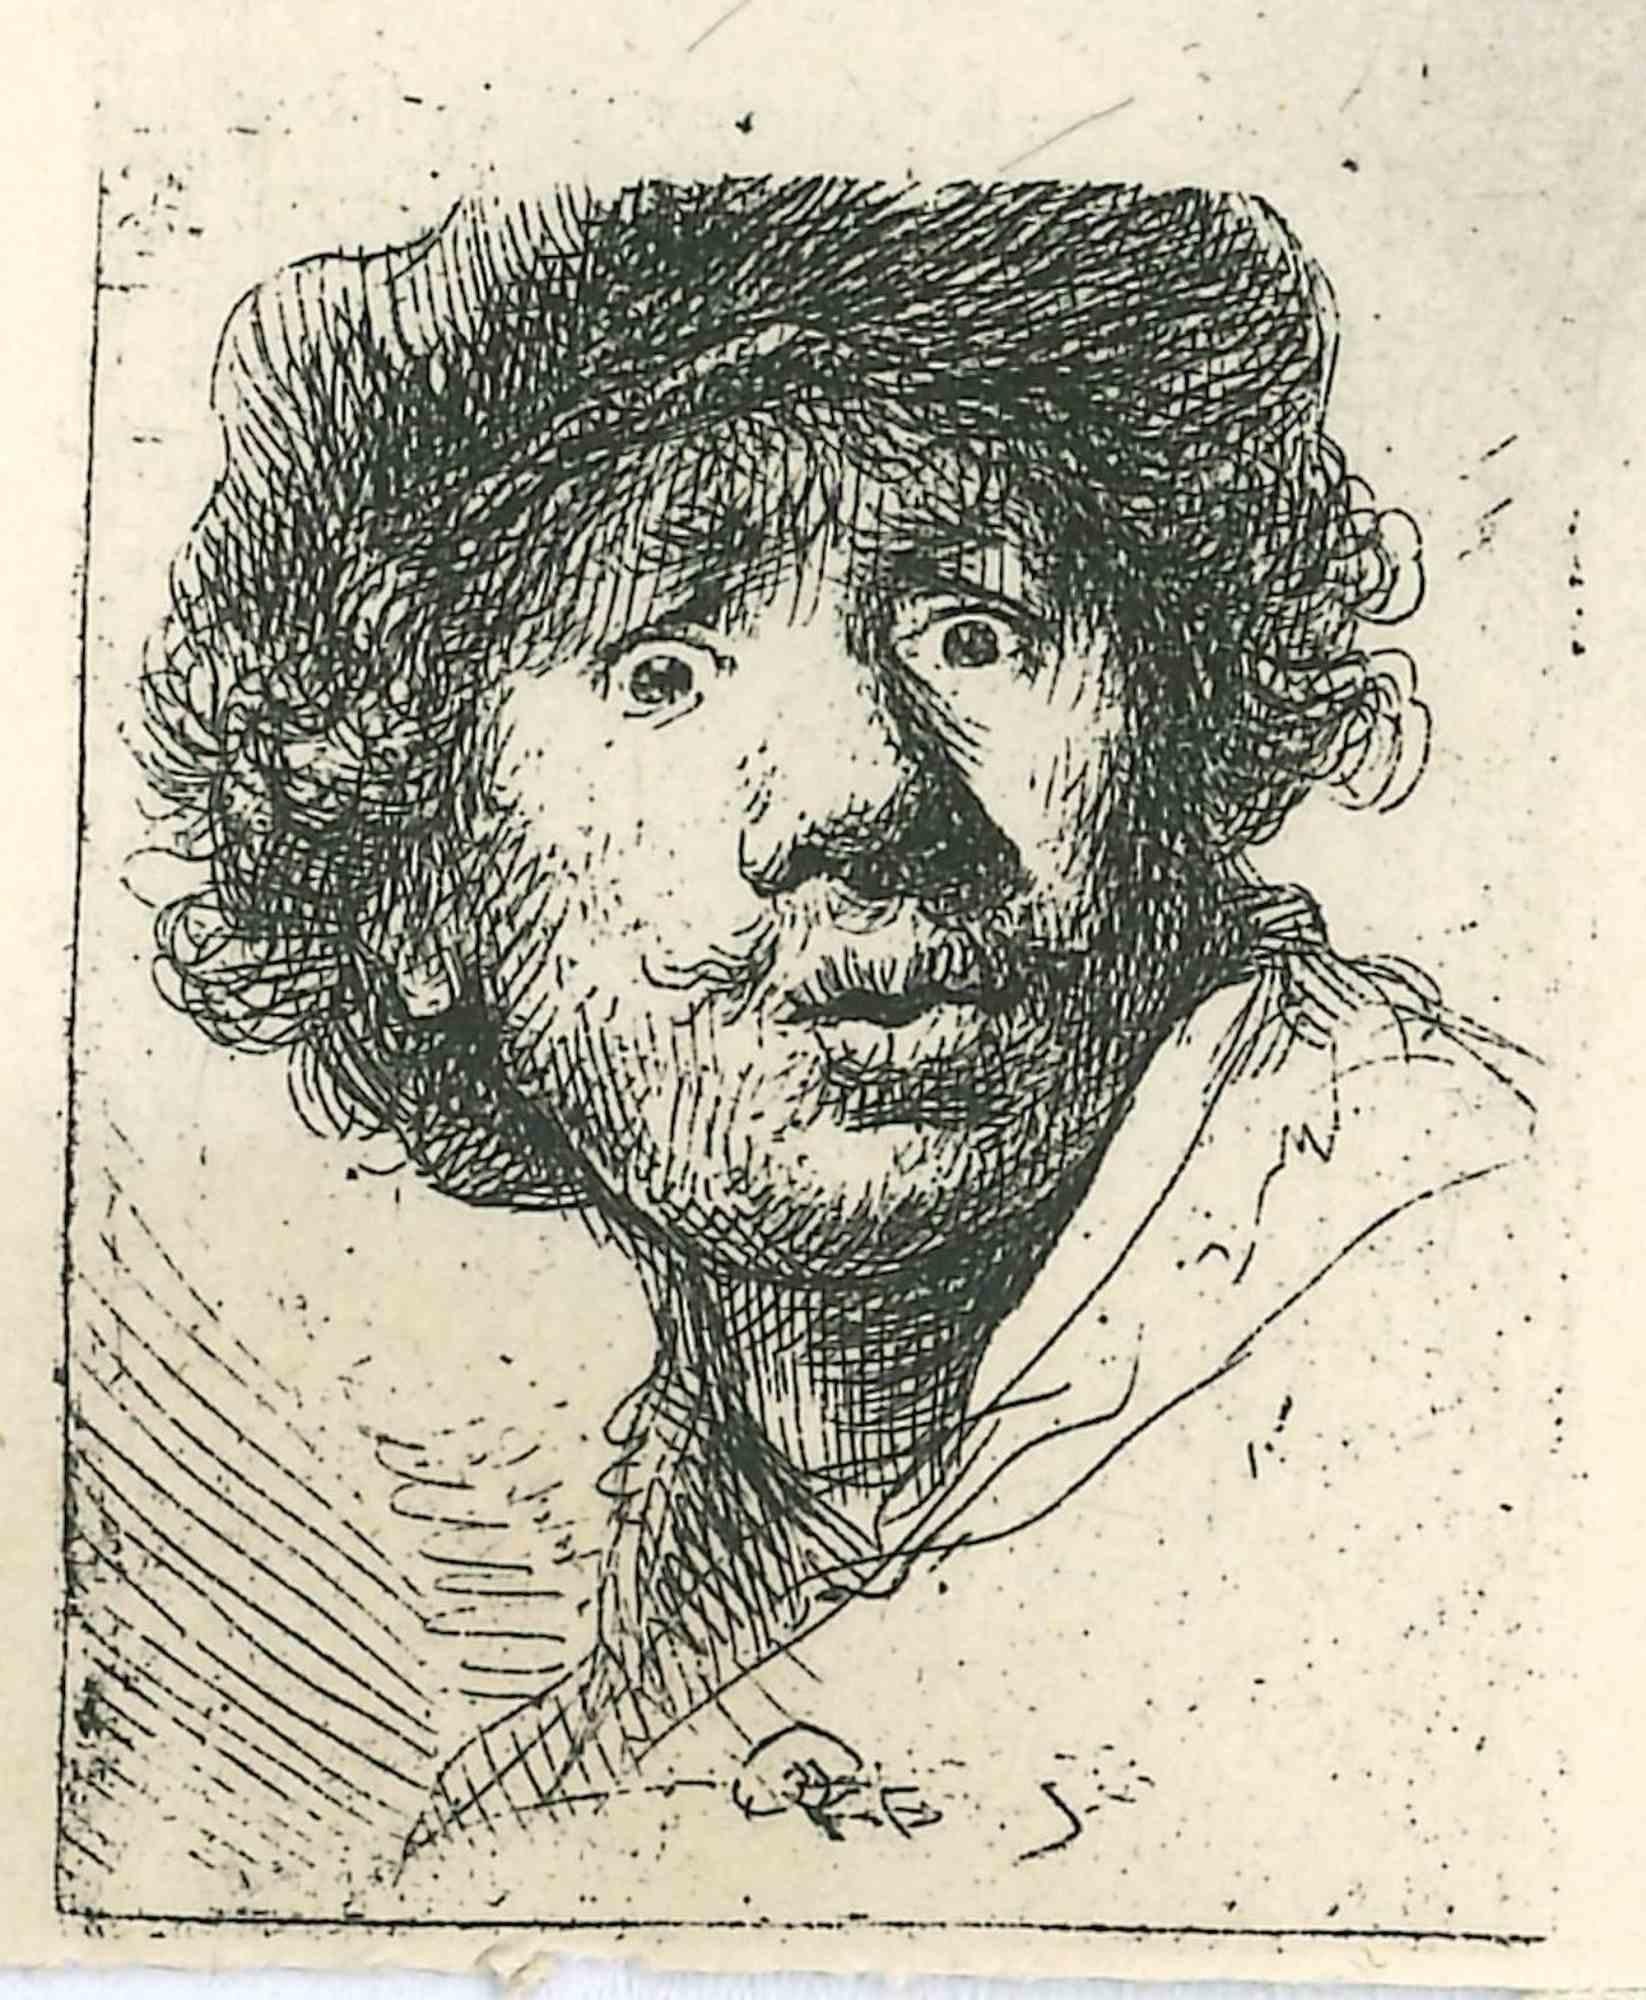 Rembrandt van Rijn Figurative Print - Frightened-Eyed (self portrait) - Etching After Rembrandt - 19th Century